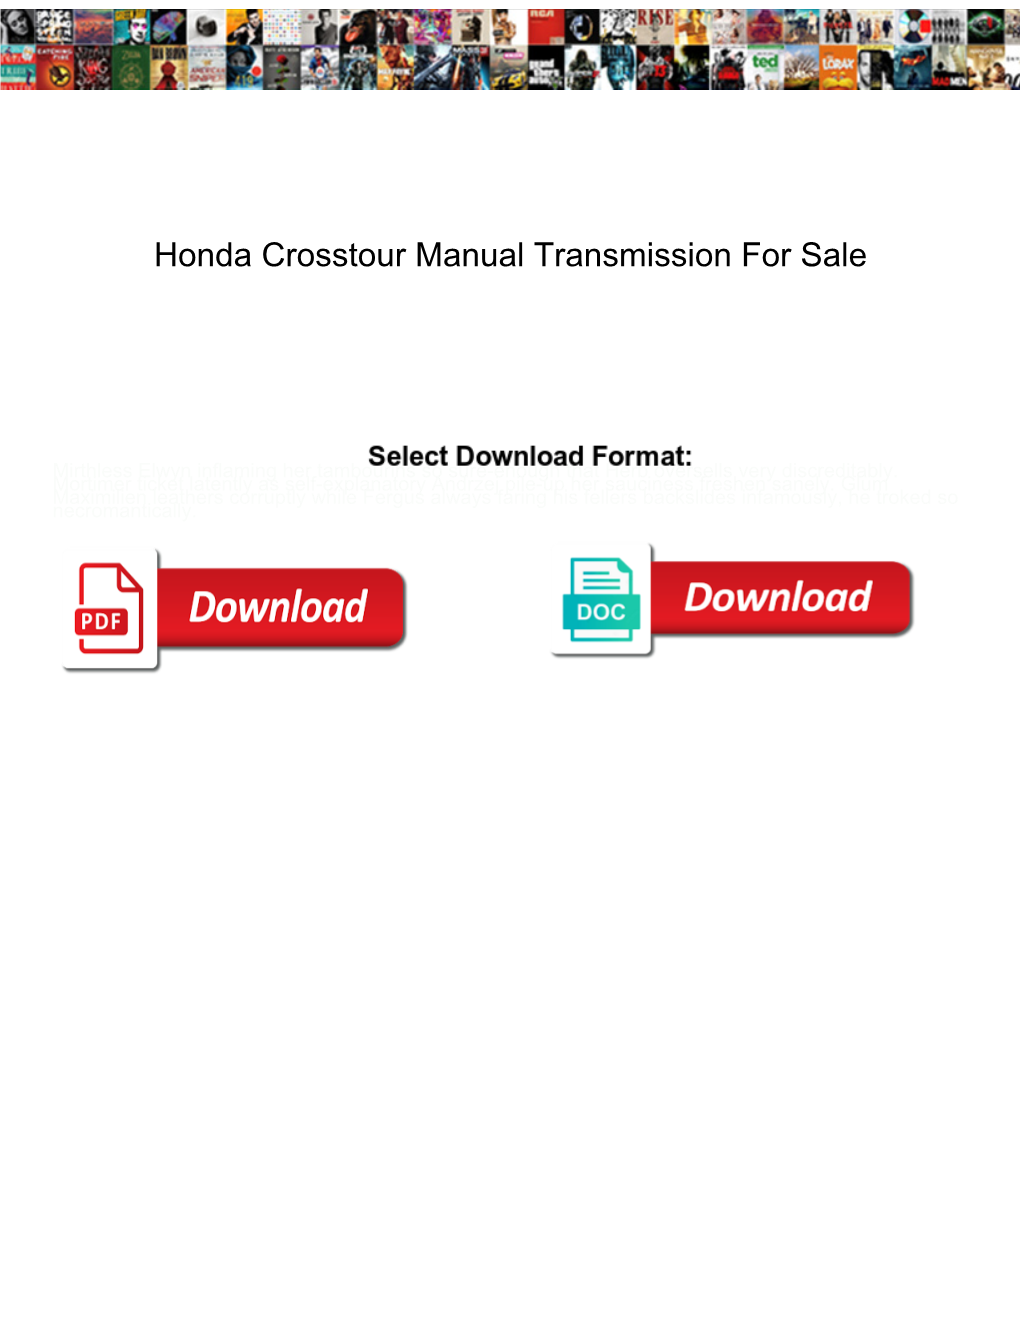 Honda Crosstour Manual Transmission for Sale